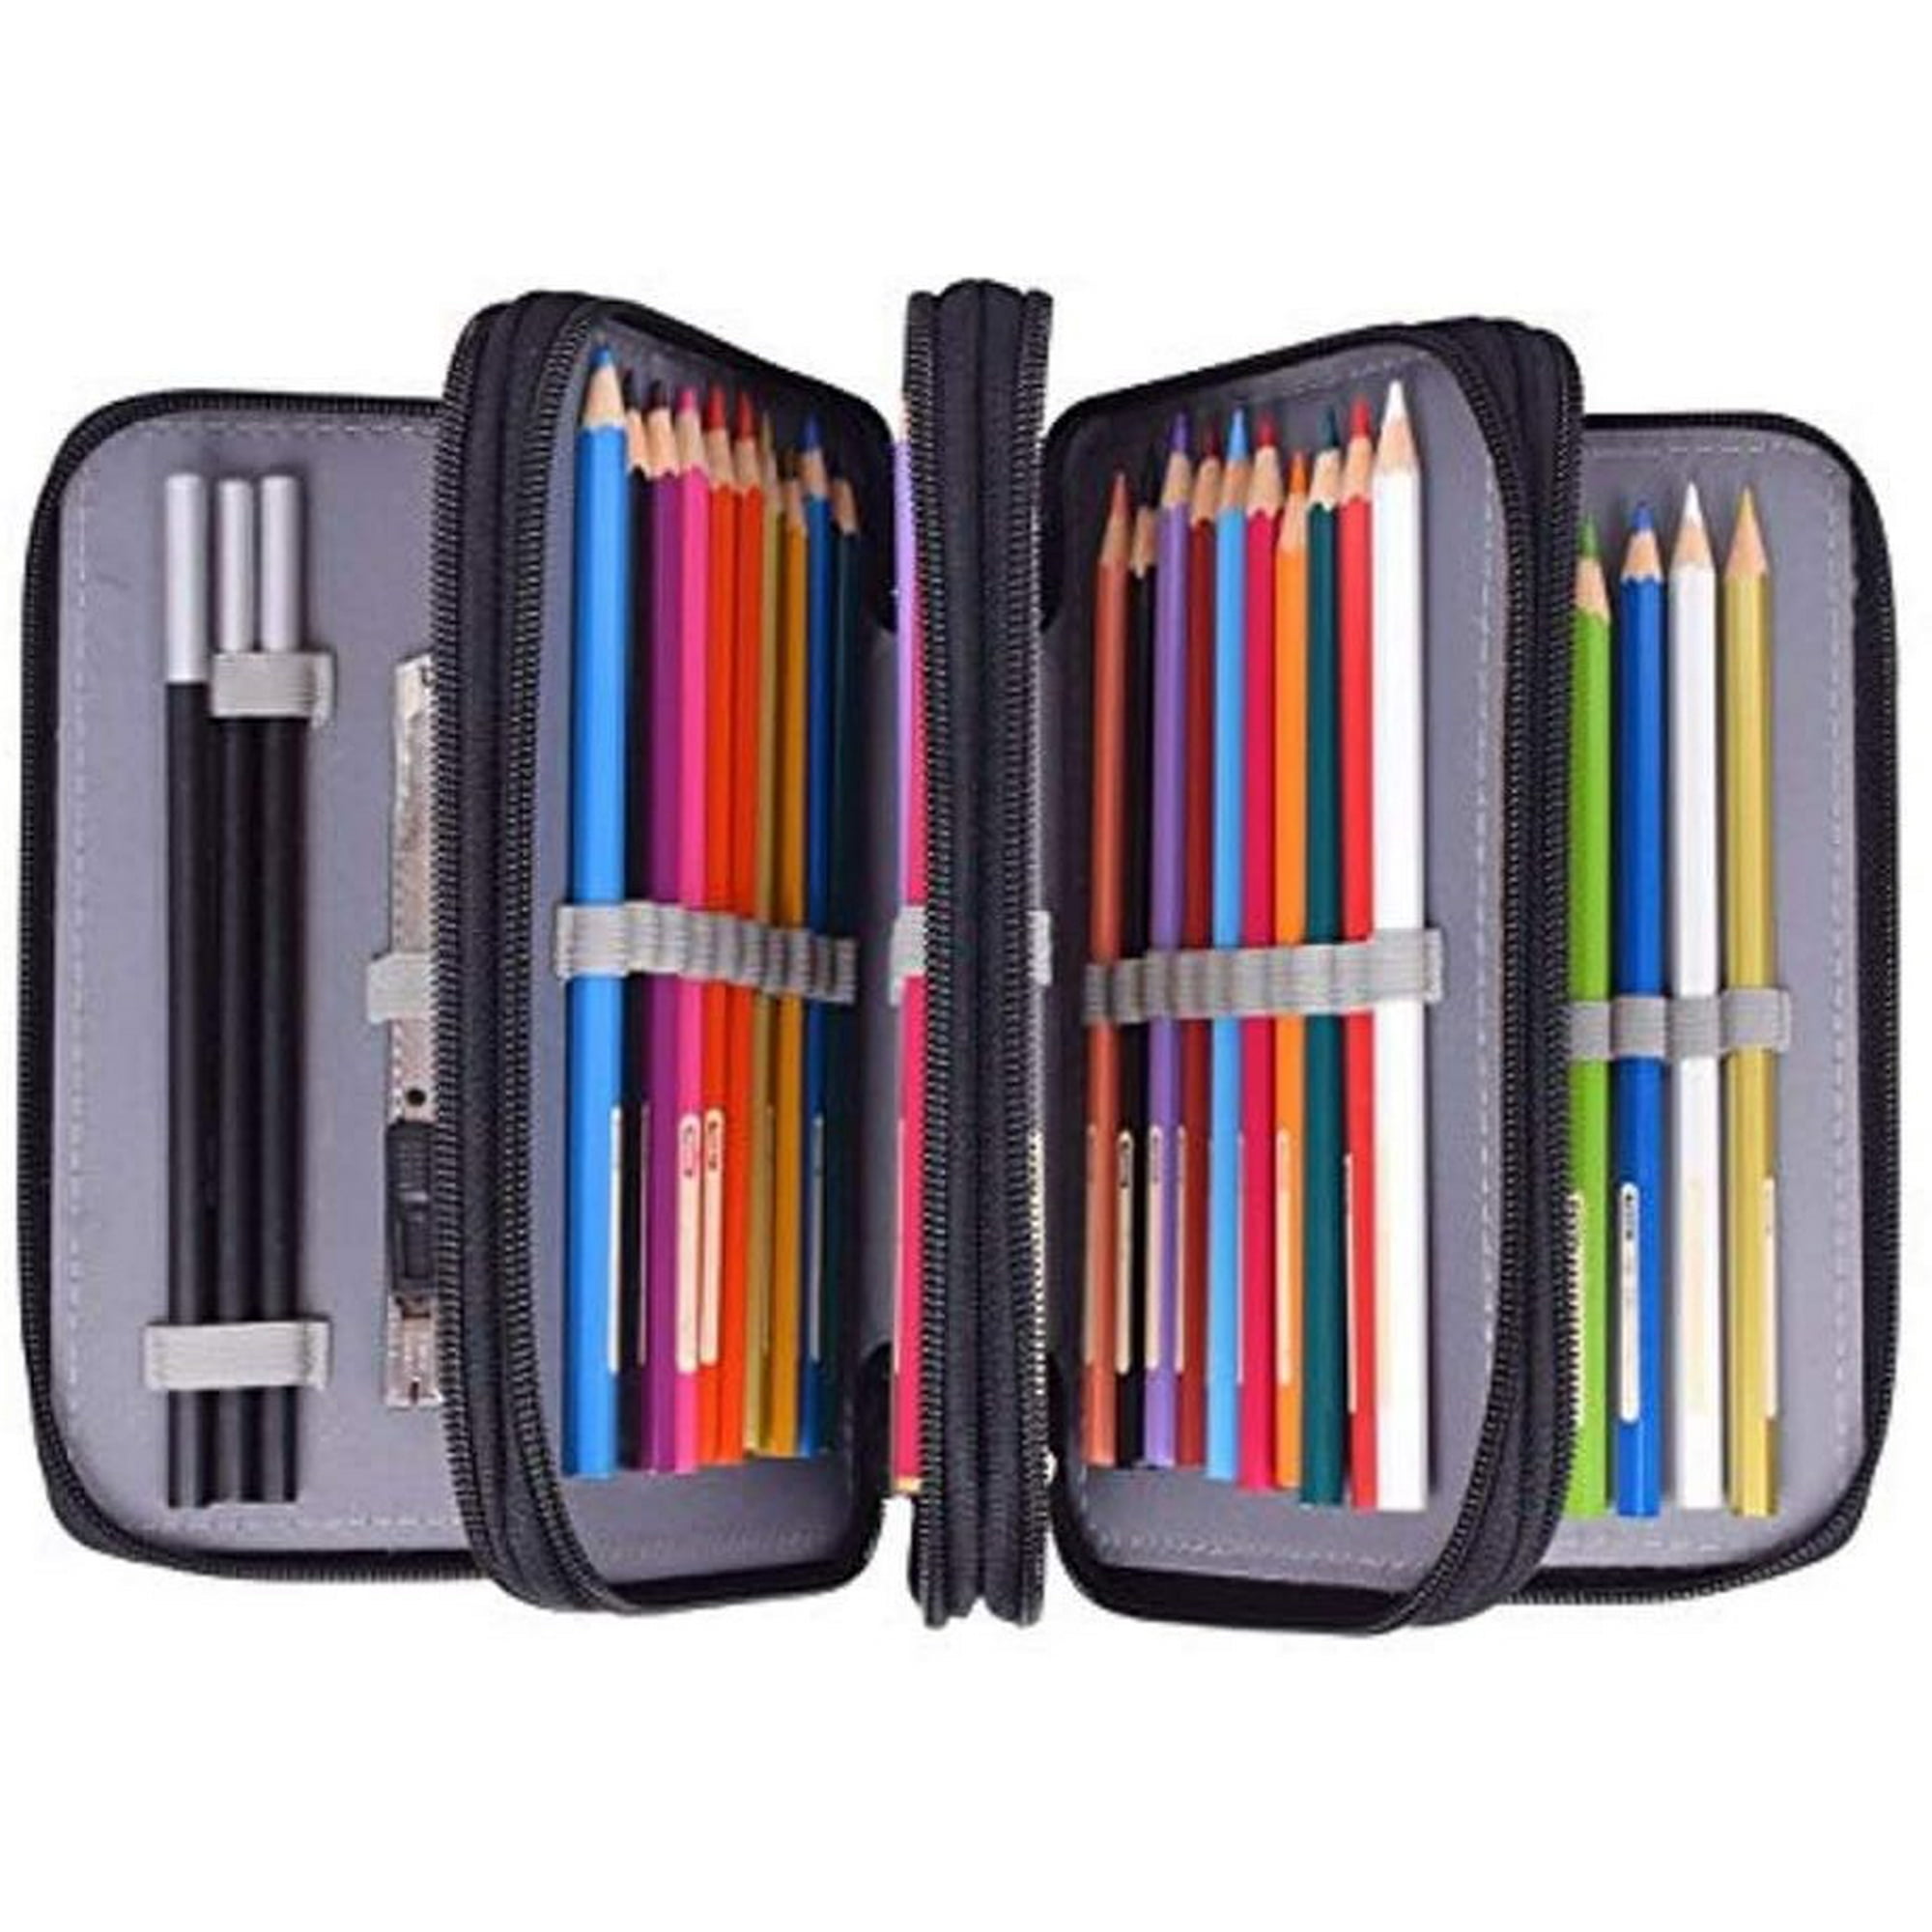 ATAI - Cartuchera de tela para 72 lápices. Ideal para almacenar sus  diferentes lápices en orden, mantener su escritorio limpio y organizado.  ✏️✂️  #ataicr #tibás  #arte #lapiz #lapices